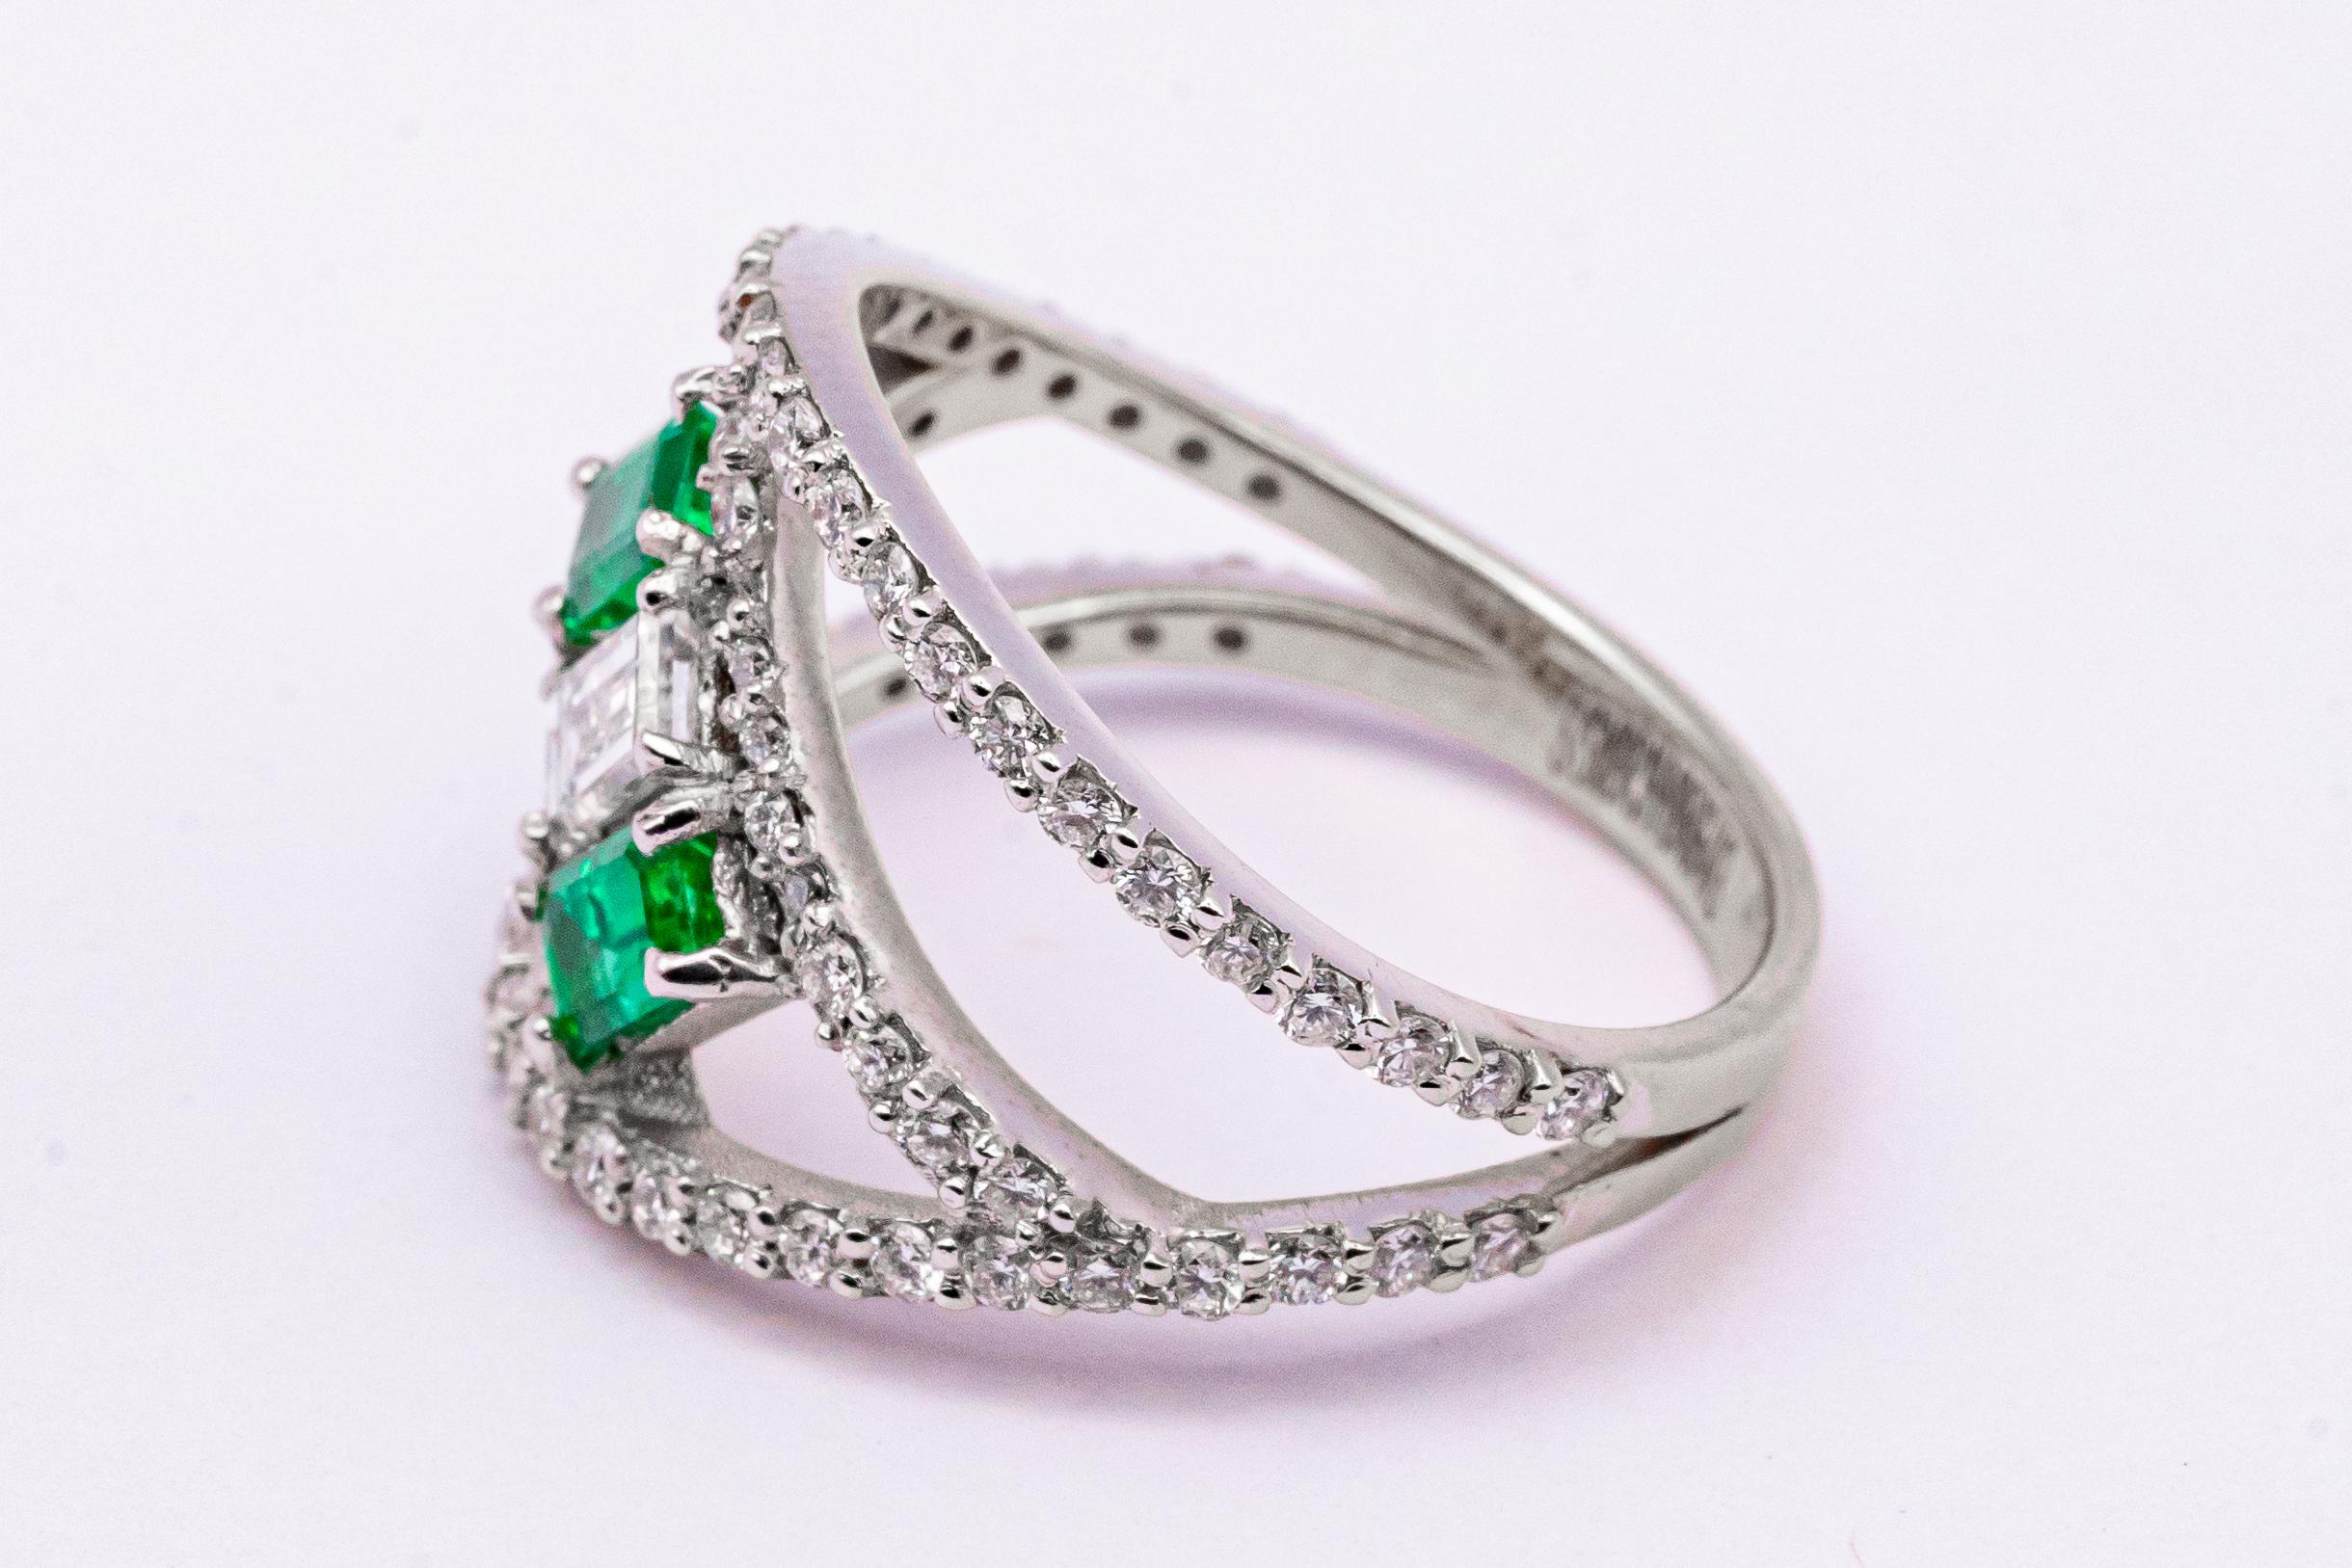 Contemporary Diamond and Emerald Ring in White Gold 0.91 Carat Diamonds 0.6 Carat Emerald For Sale